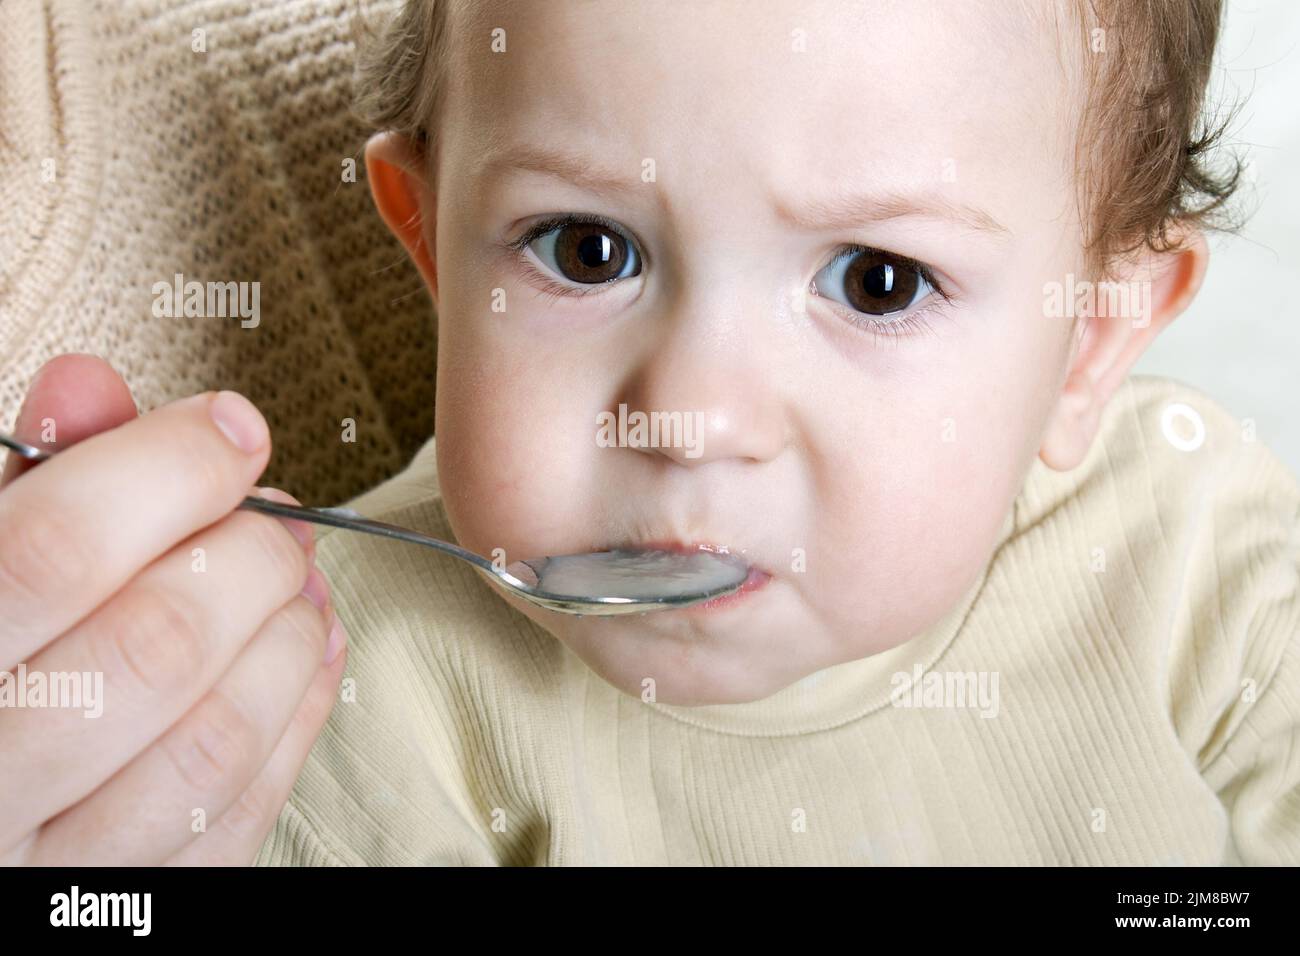 Feeding child Stock Photo